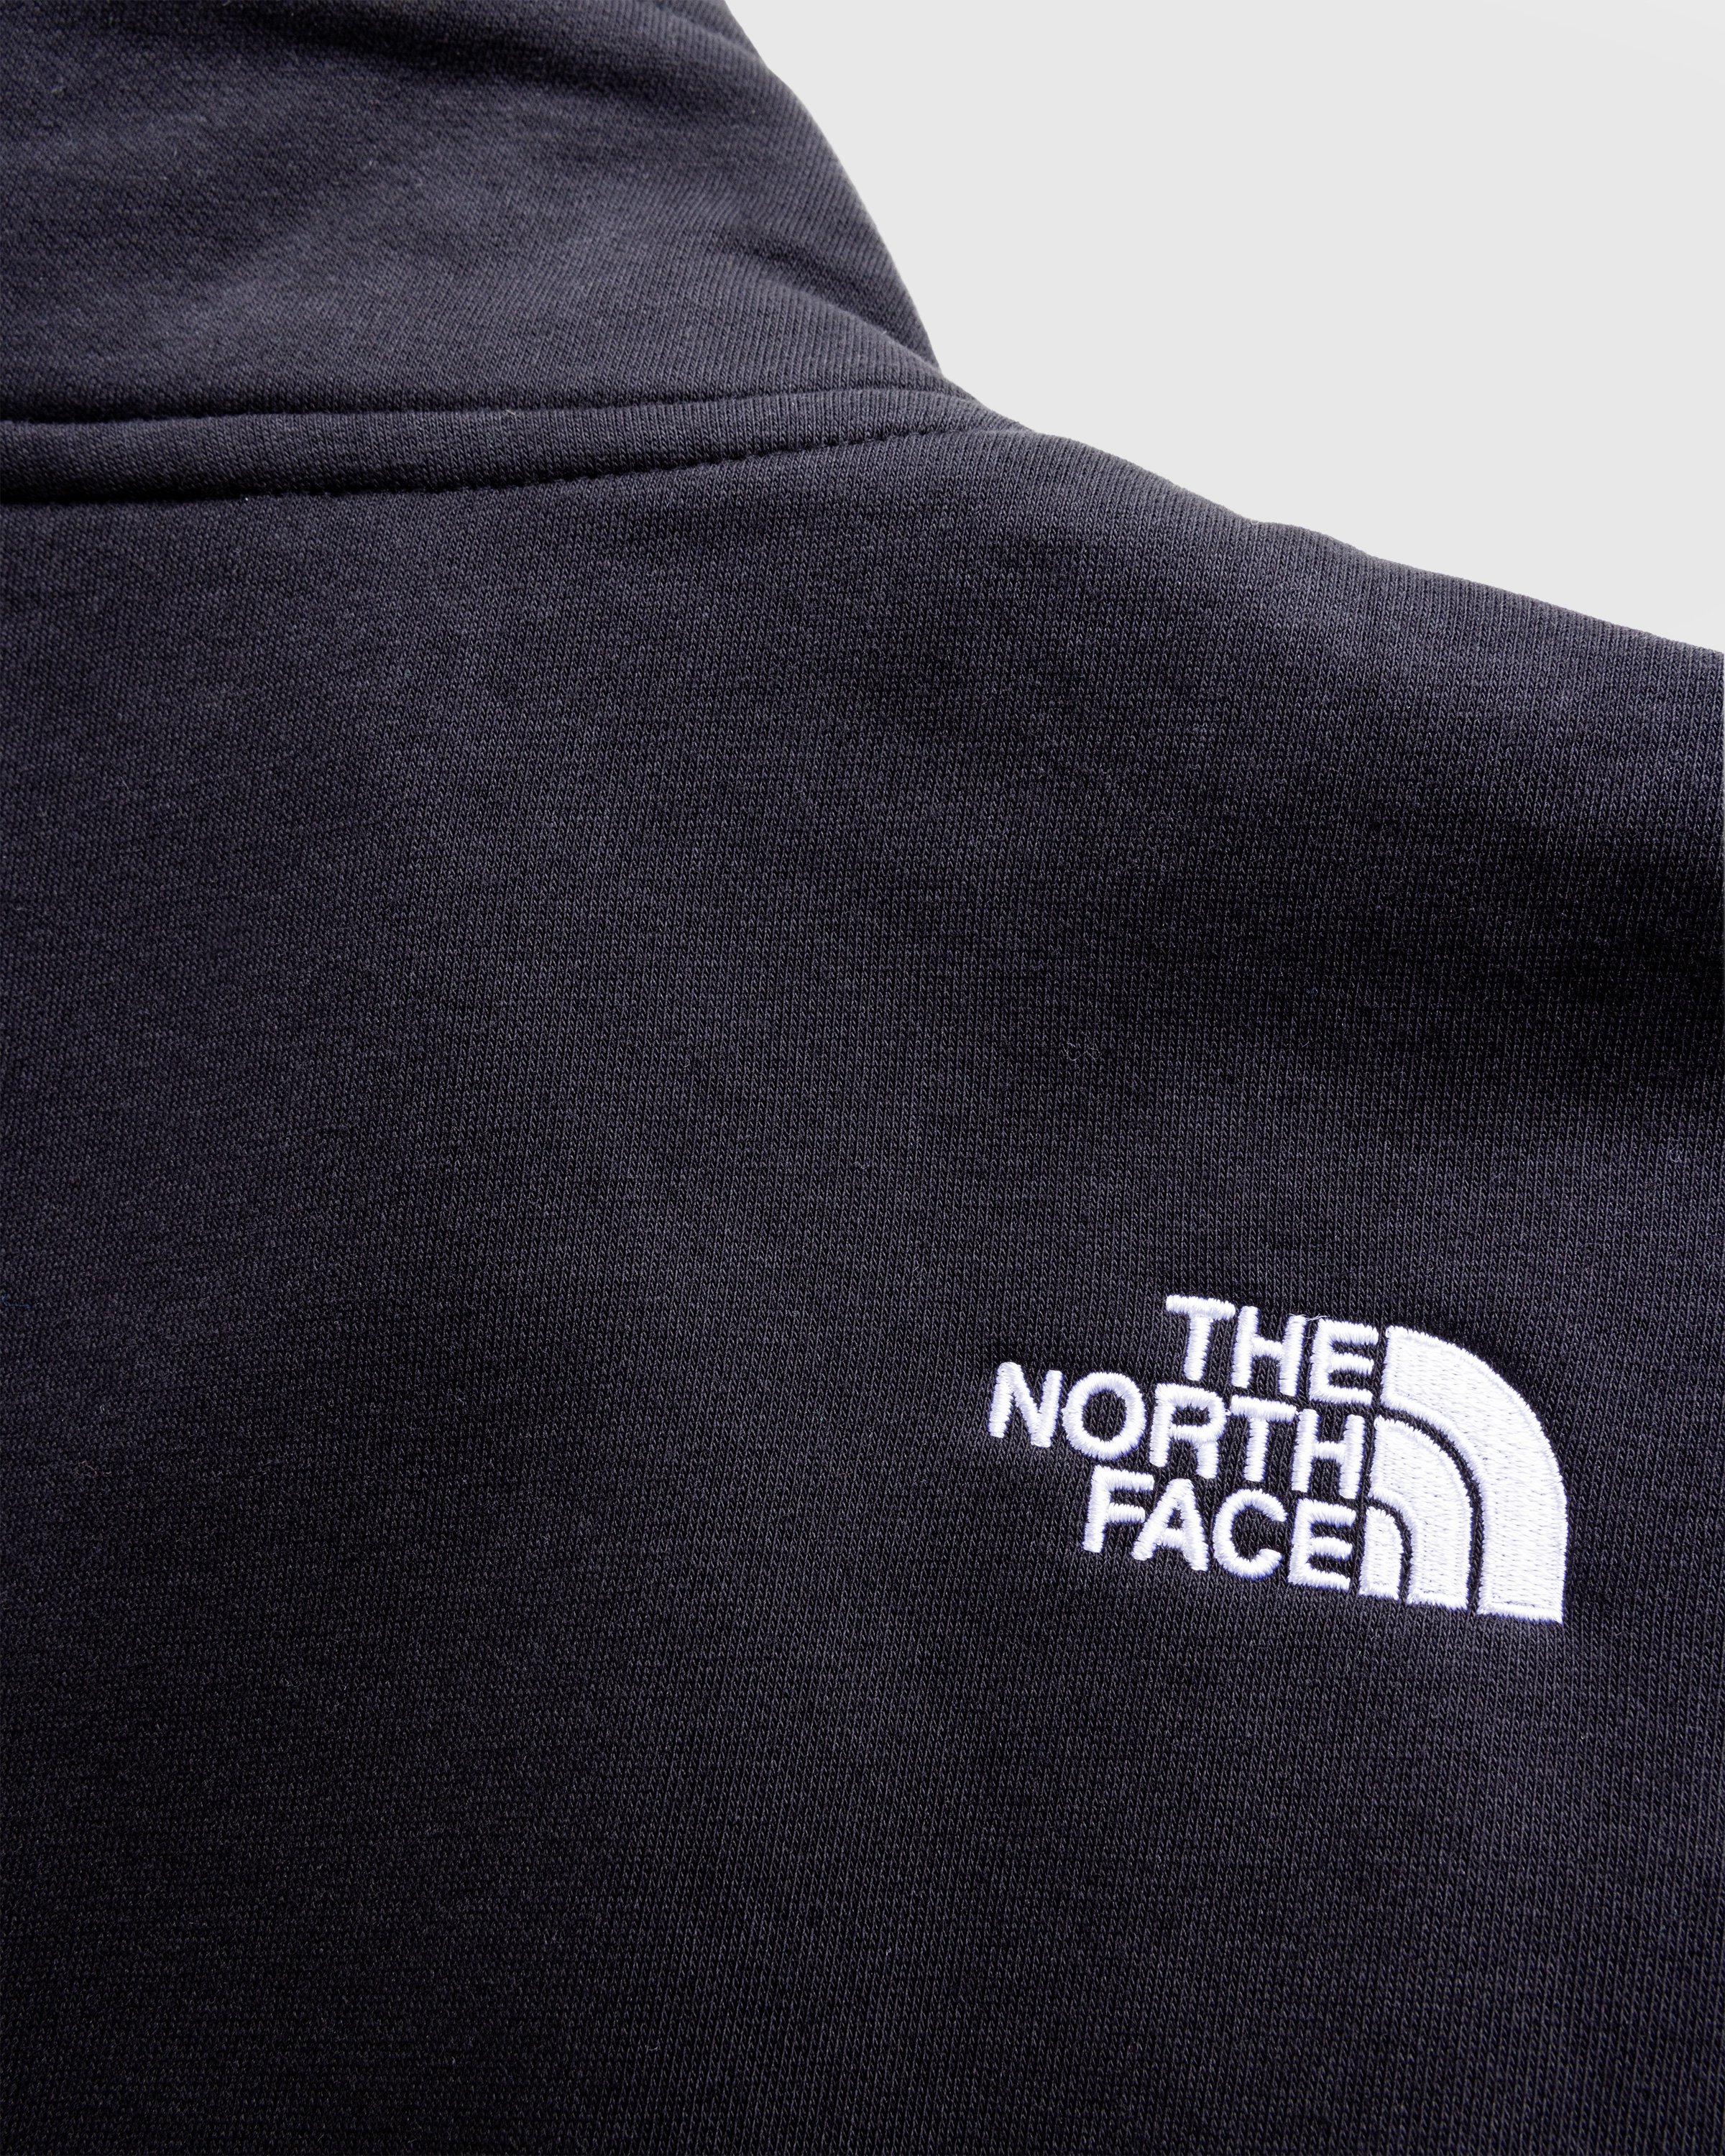 The North Face - M ESSENTIAL QZ CREW TNF BLACK - Clothing - Black - Image 6